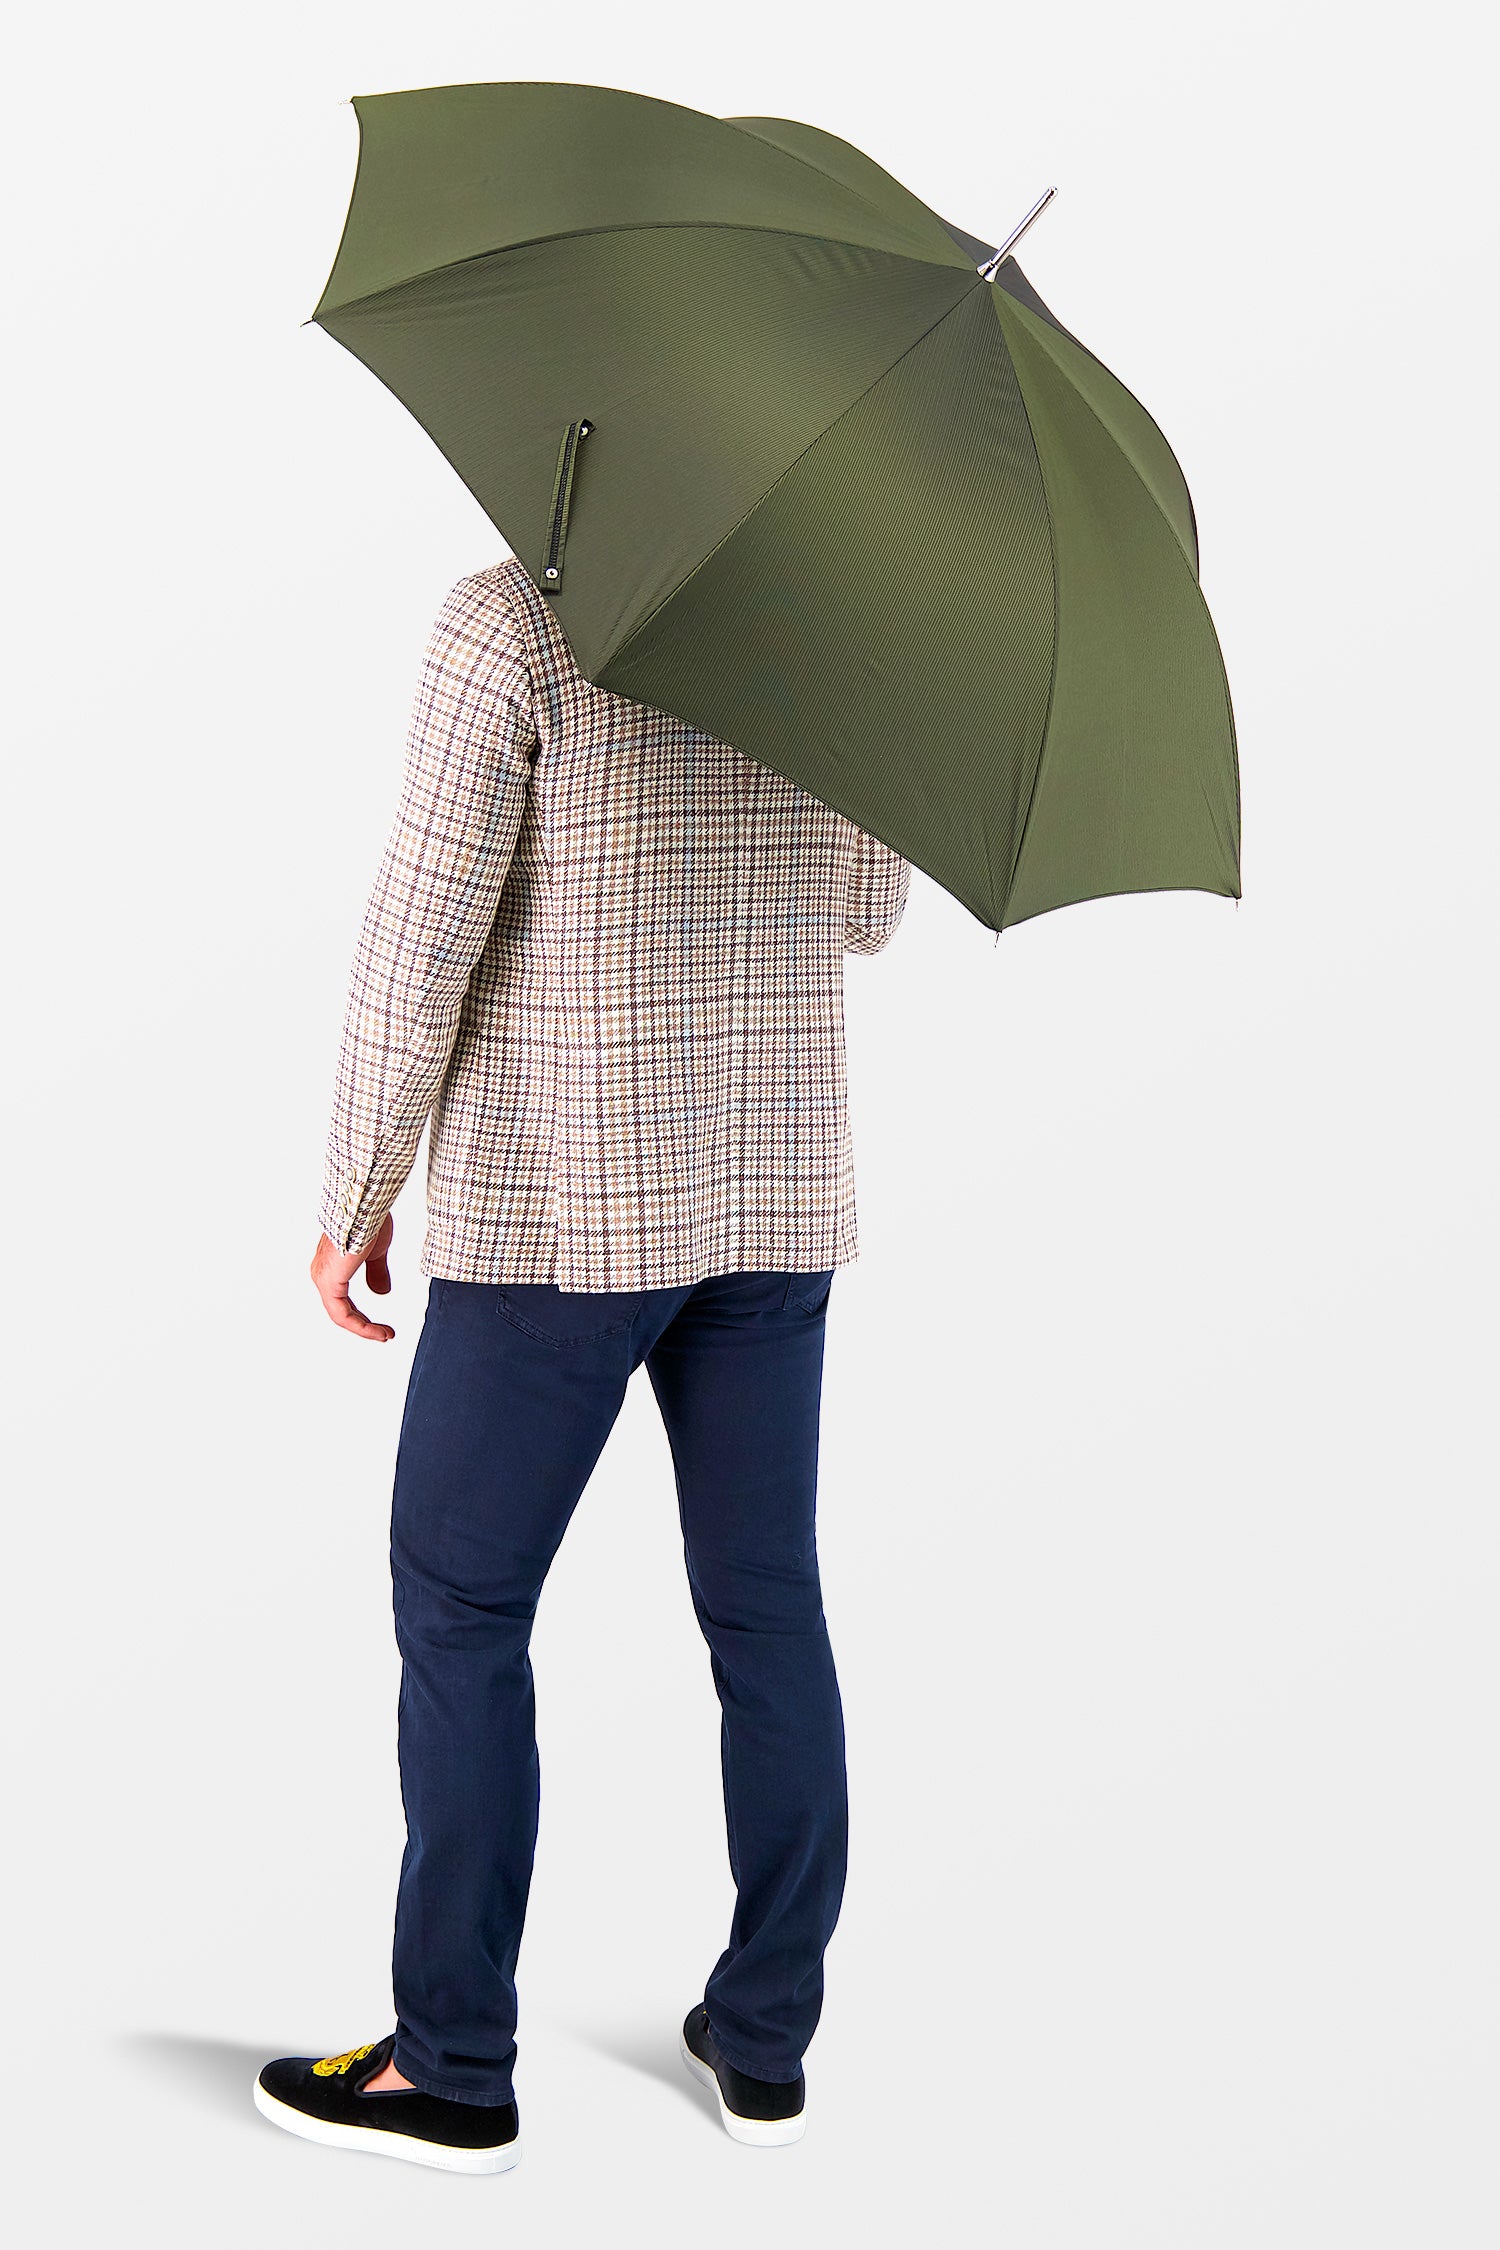 Pasotti Green Umbrella, Silver Lion Handle